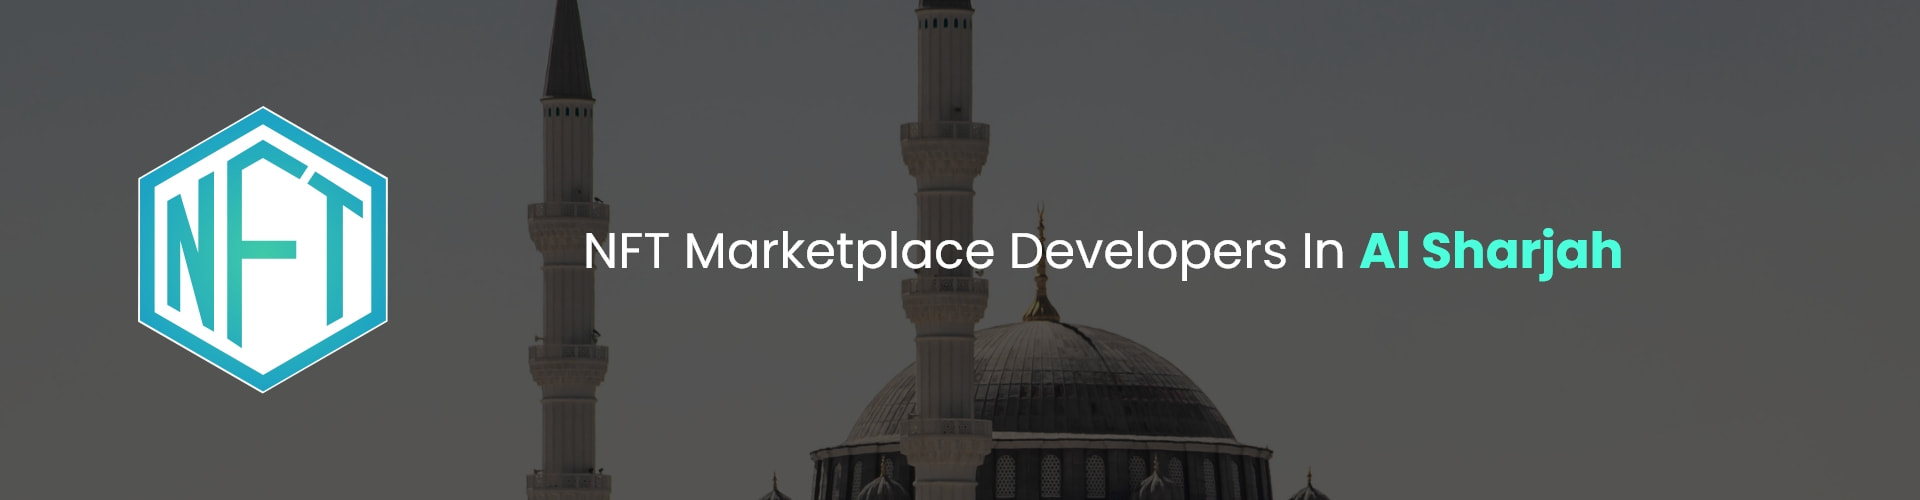 hire nft marketplace developers in al sharjah